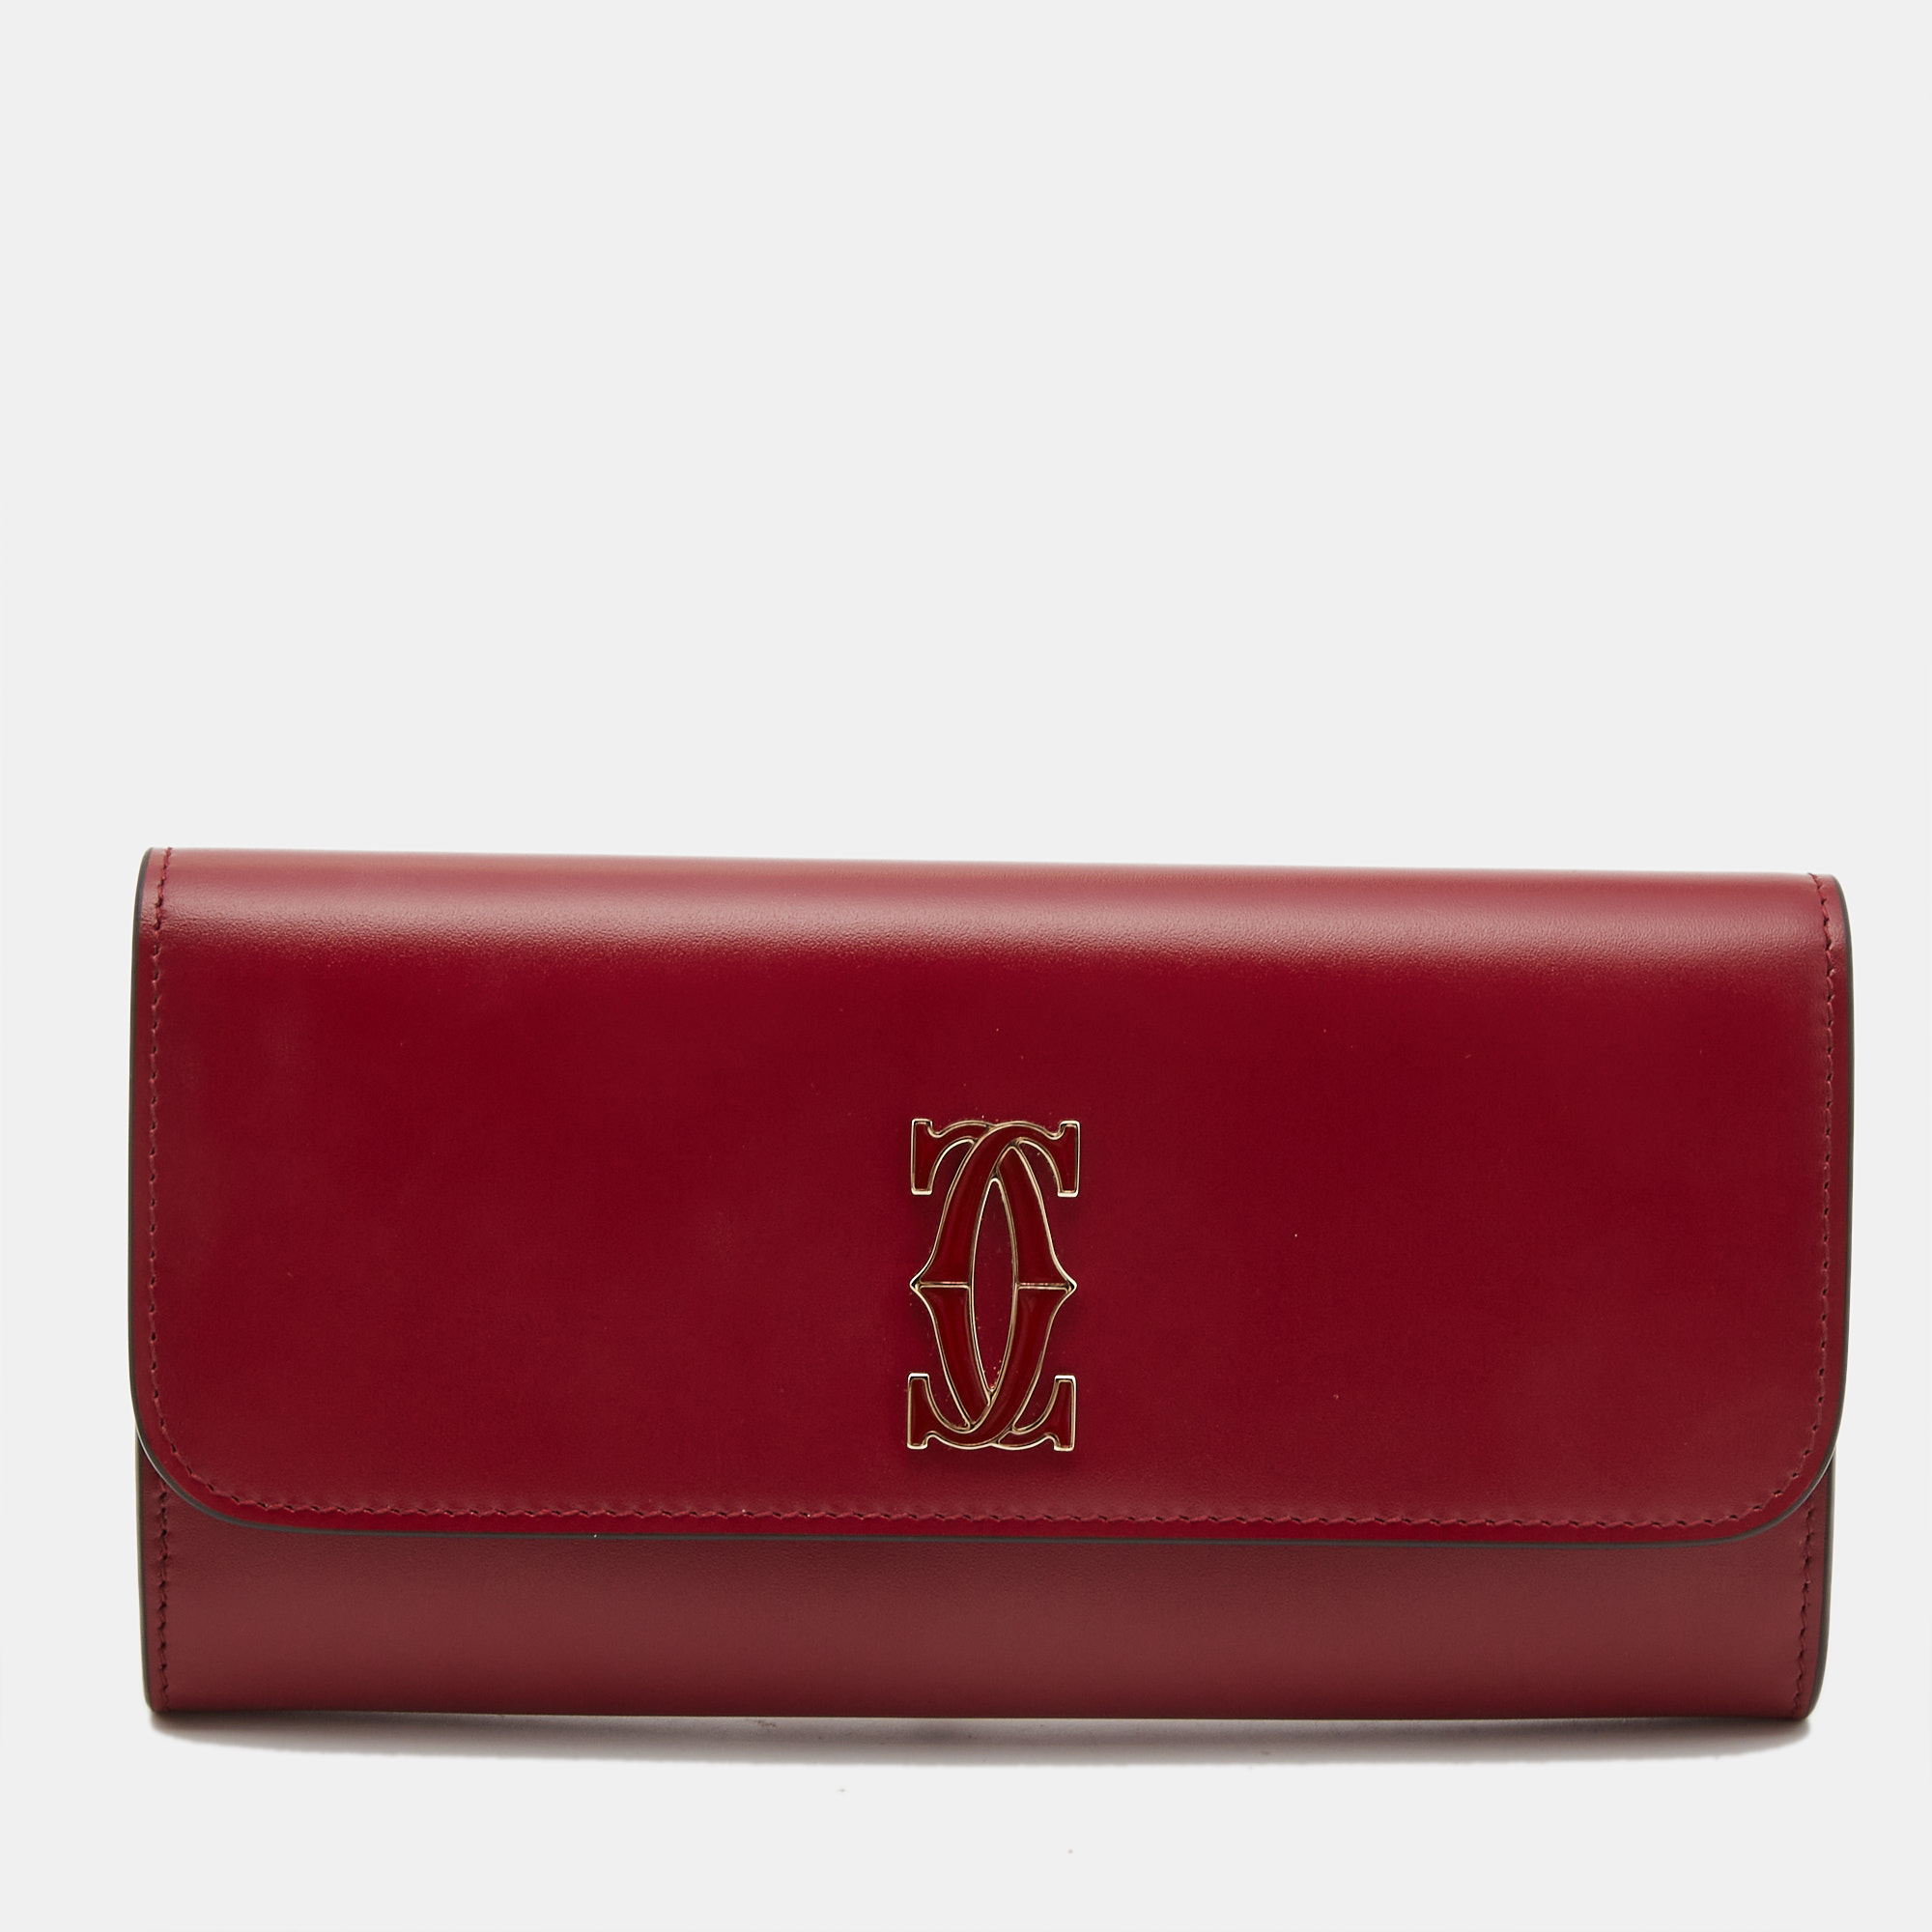 Cartier red leather c de cartier continental wallet